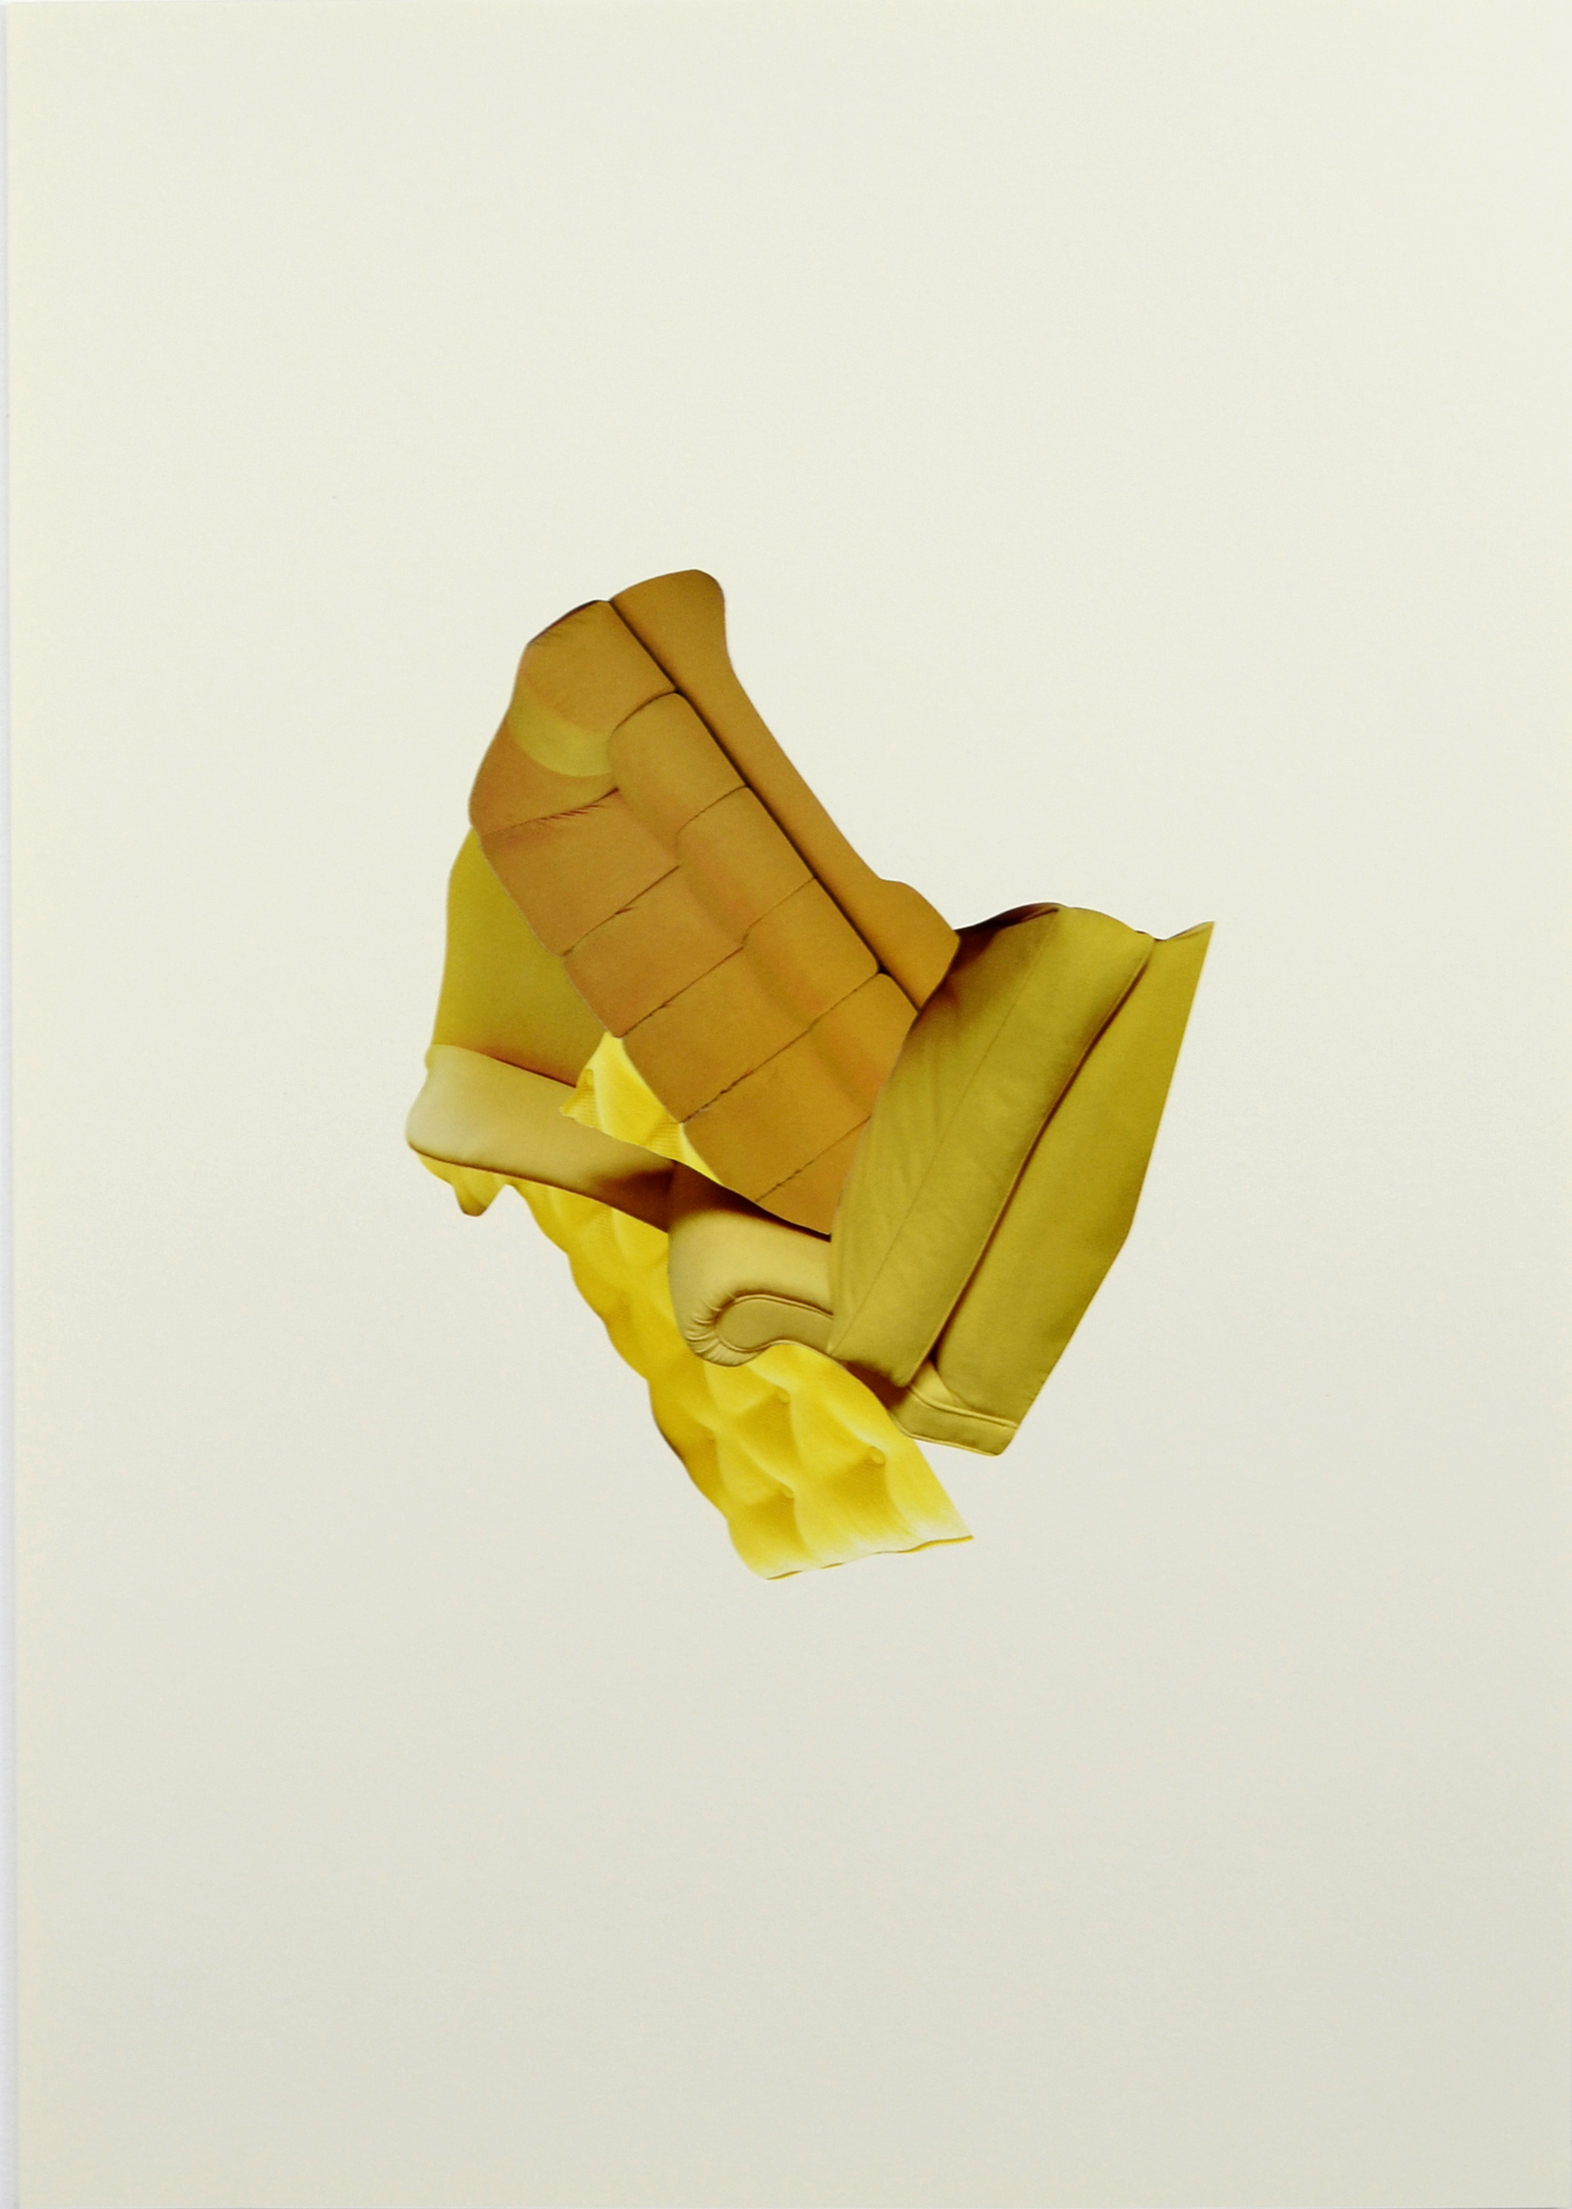 Hisae Ikenaga - Dcomposition en douceur, jaune, 2021